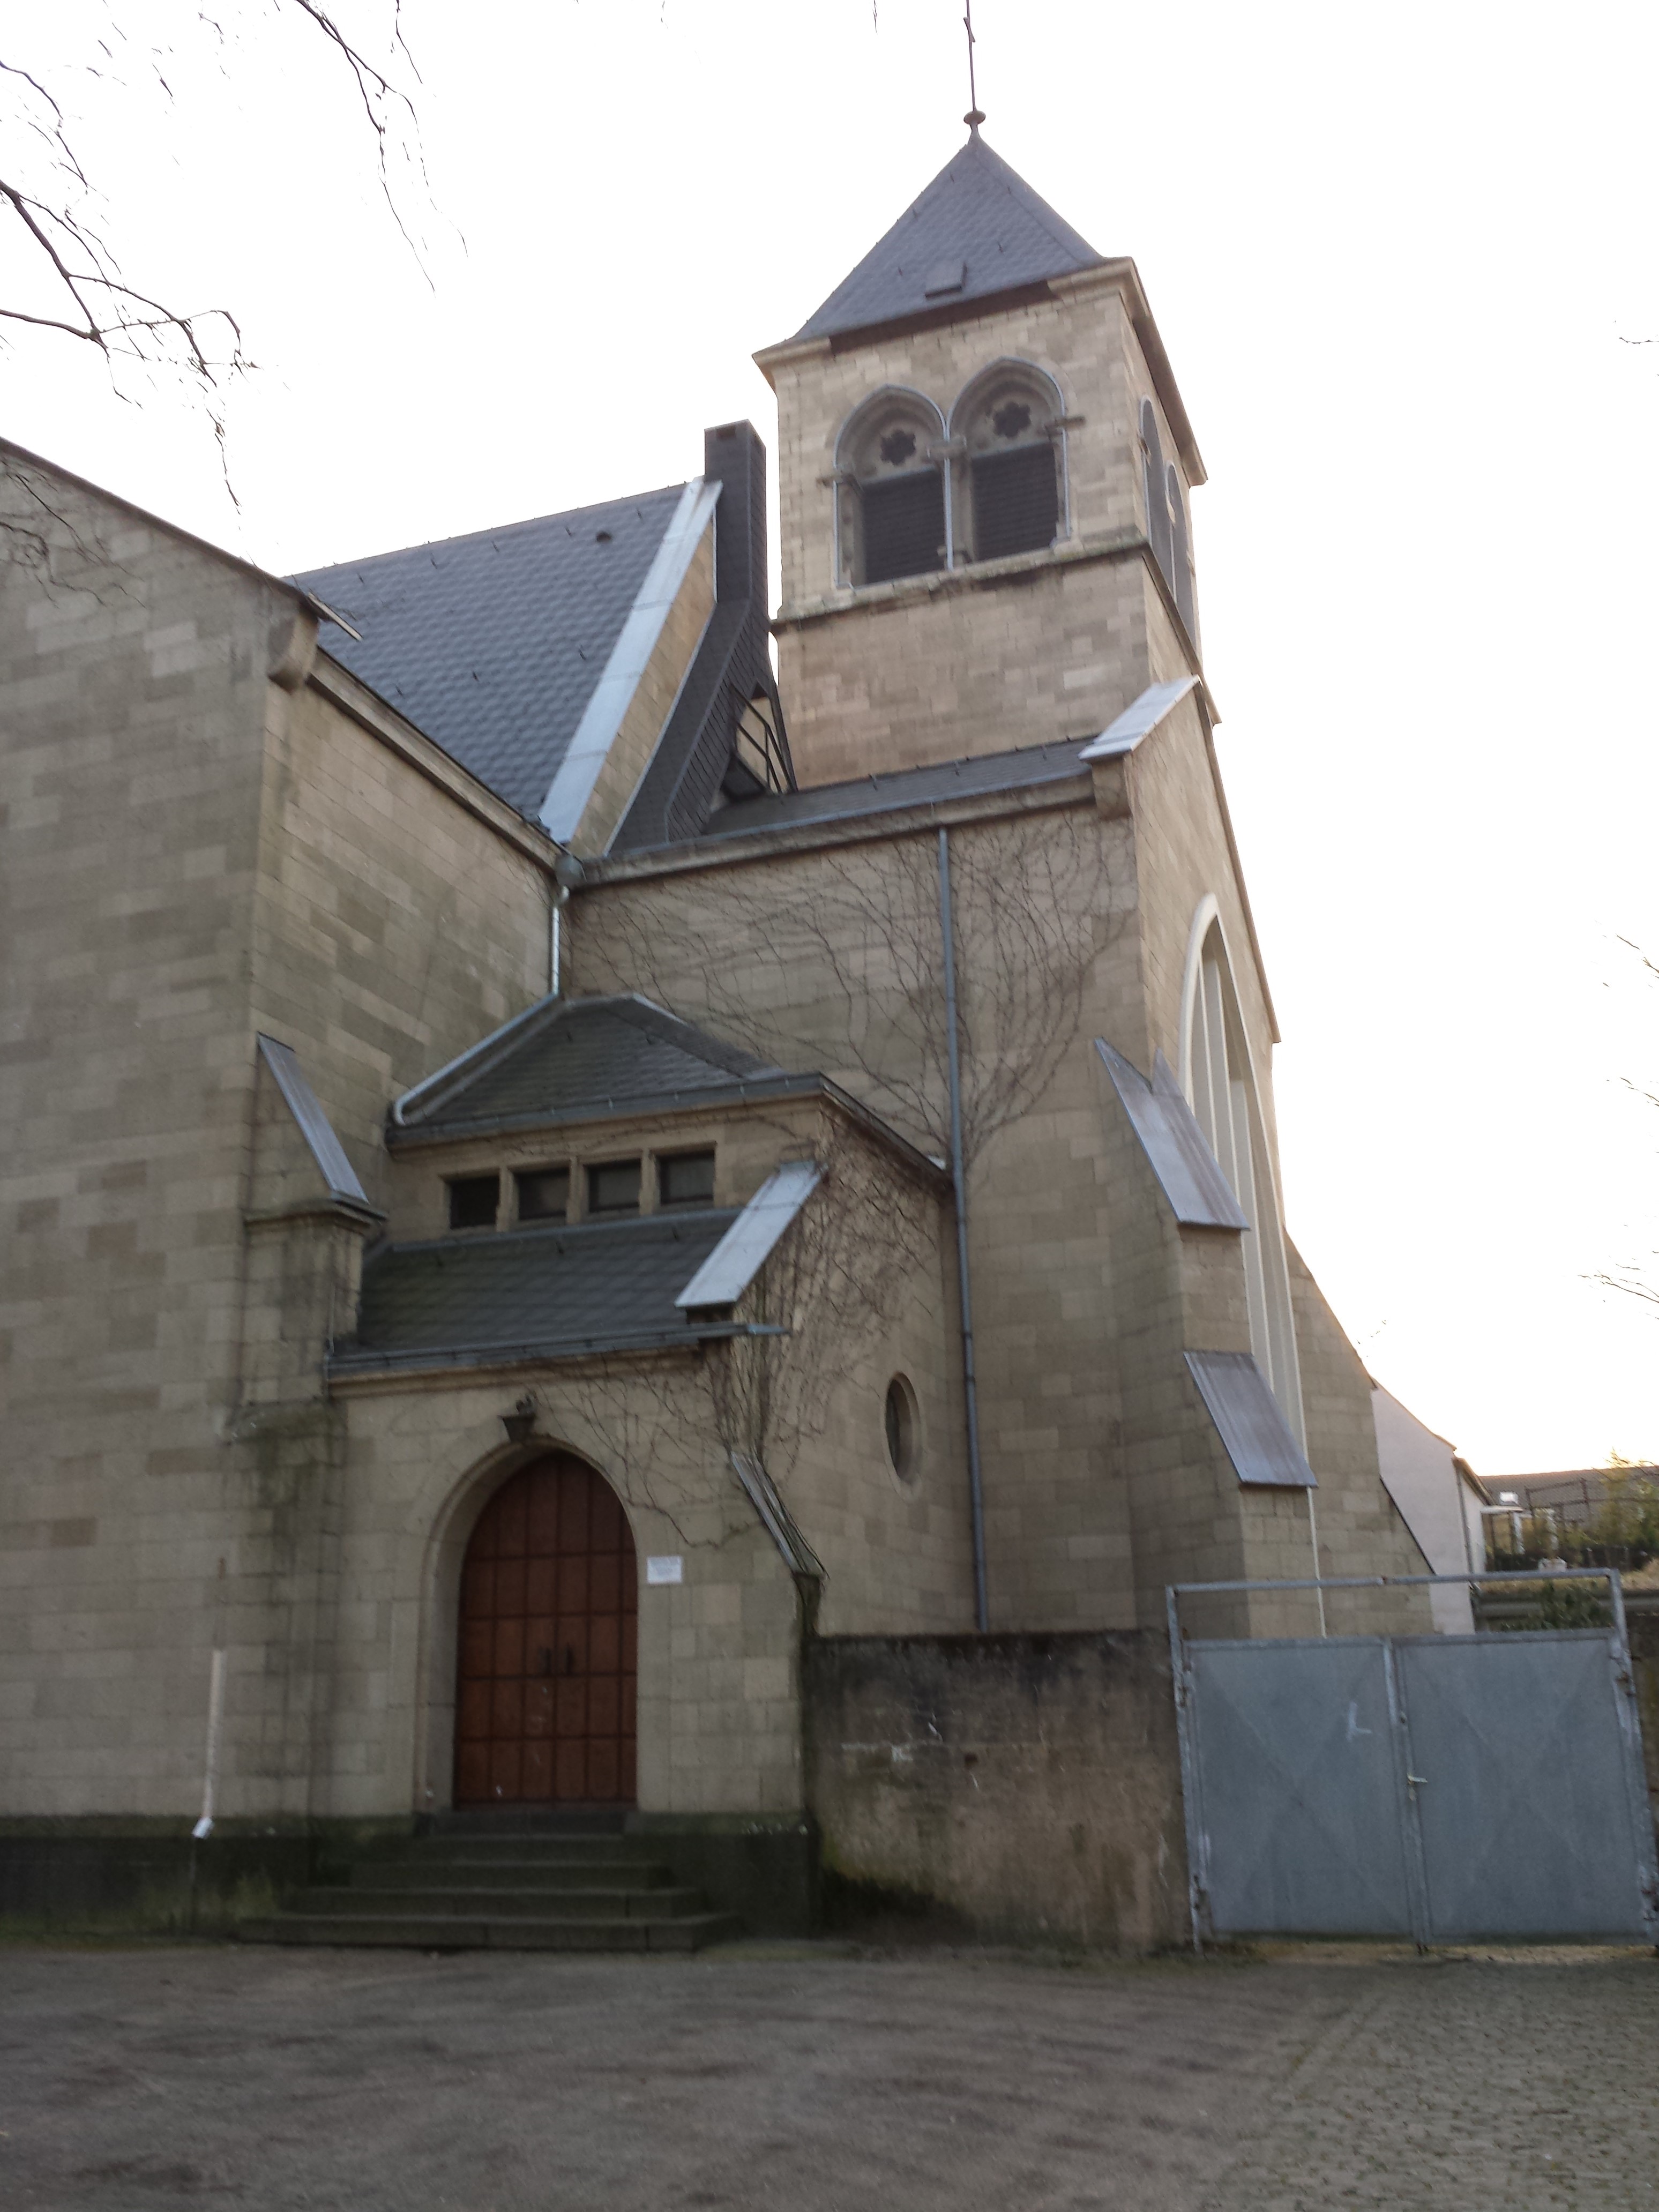 Bild 4 Gnadenkirche Wanheimerort - Evangelische Gemeinde Duisburg-Wanheimerort in Duisburg